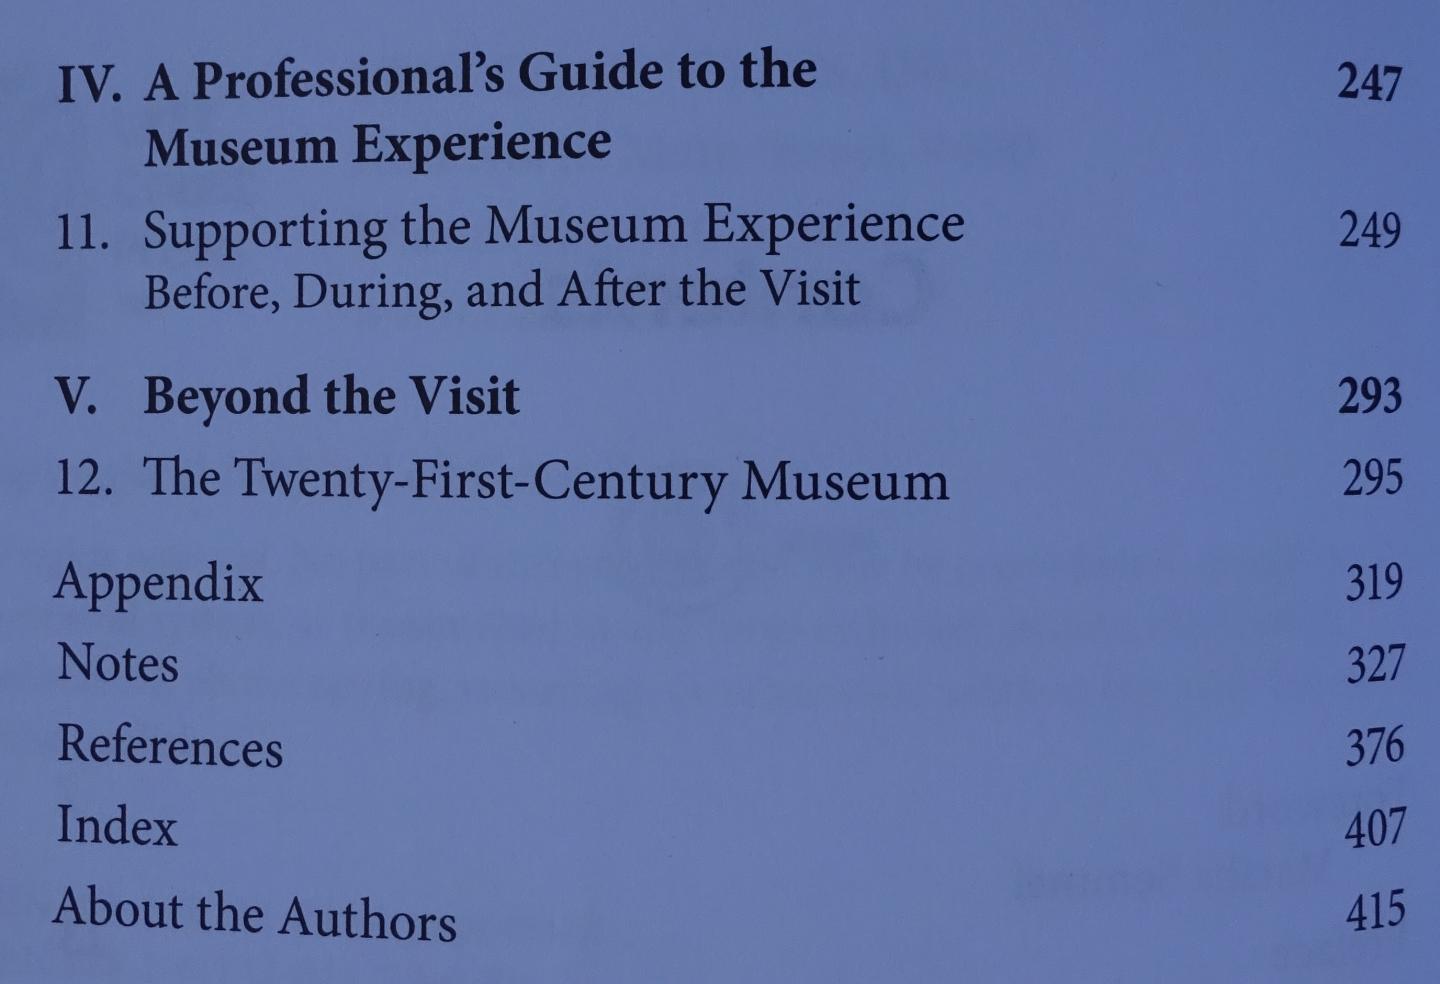 Falk, John H. / Lynn D. Dierking - The Museum Experience Revisited [ isbn 9781611320459 ]